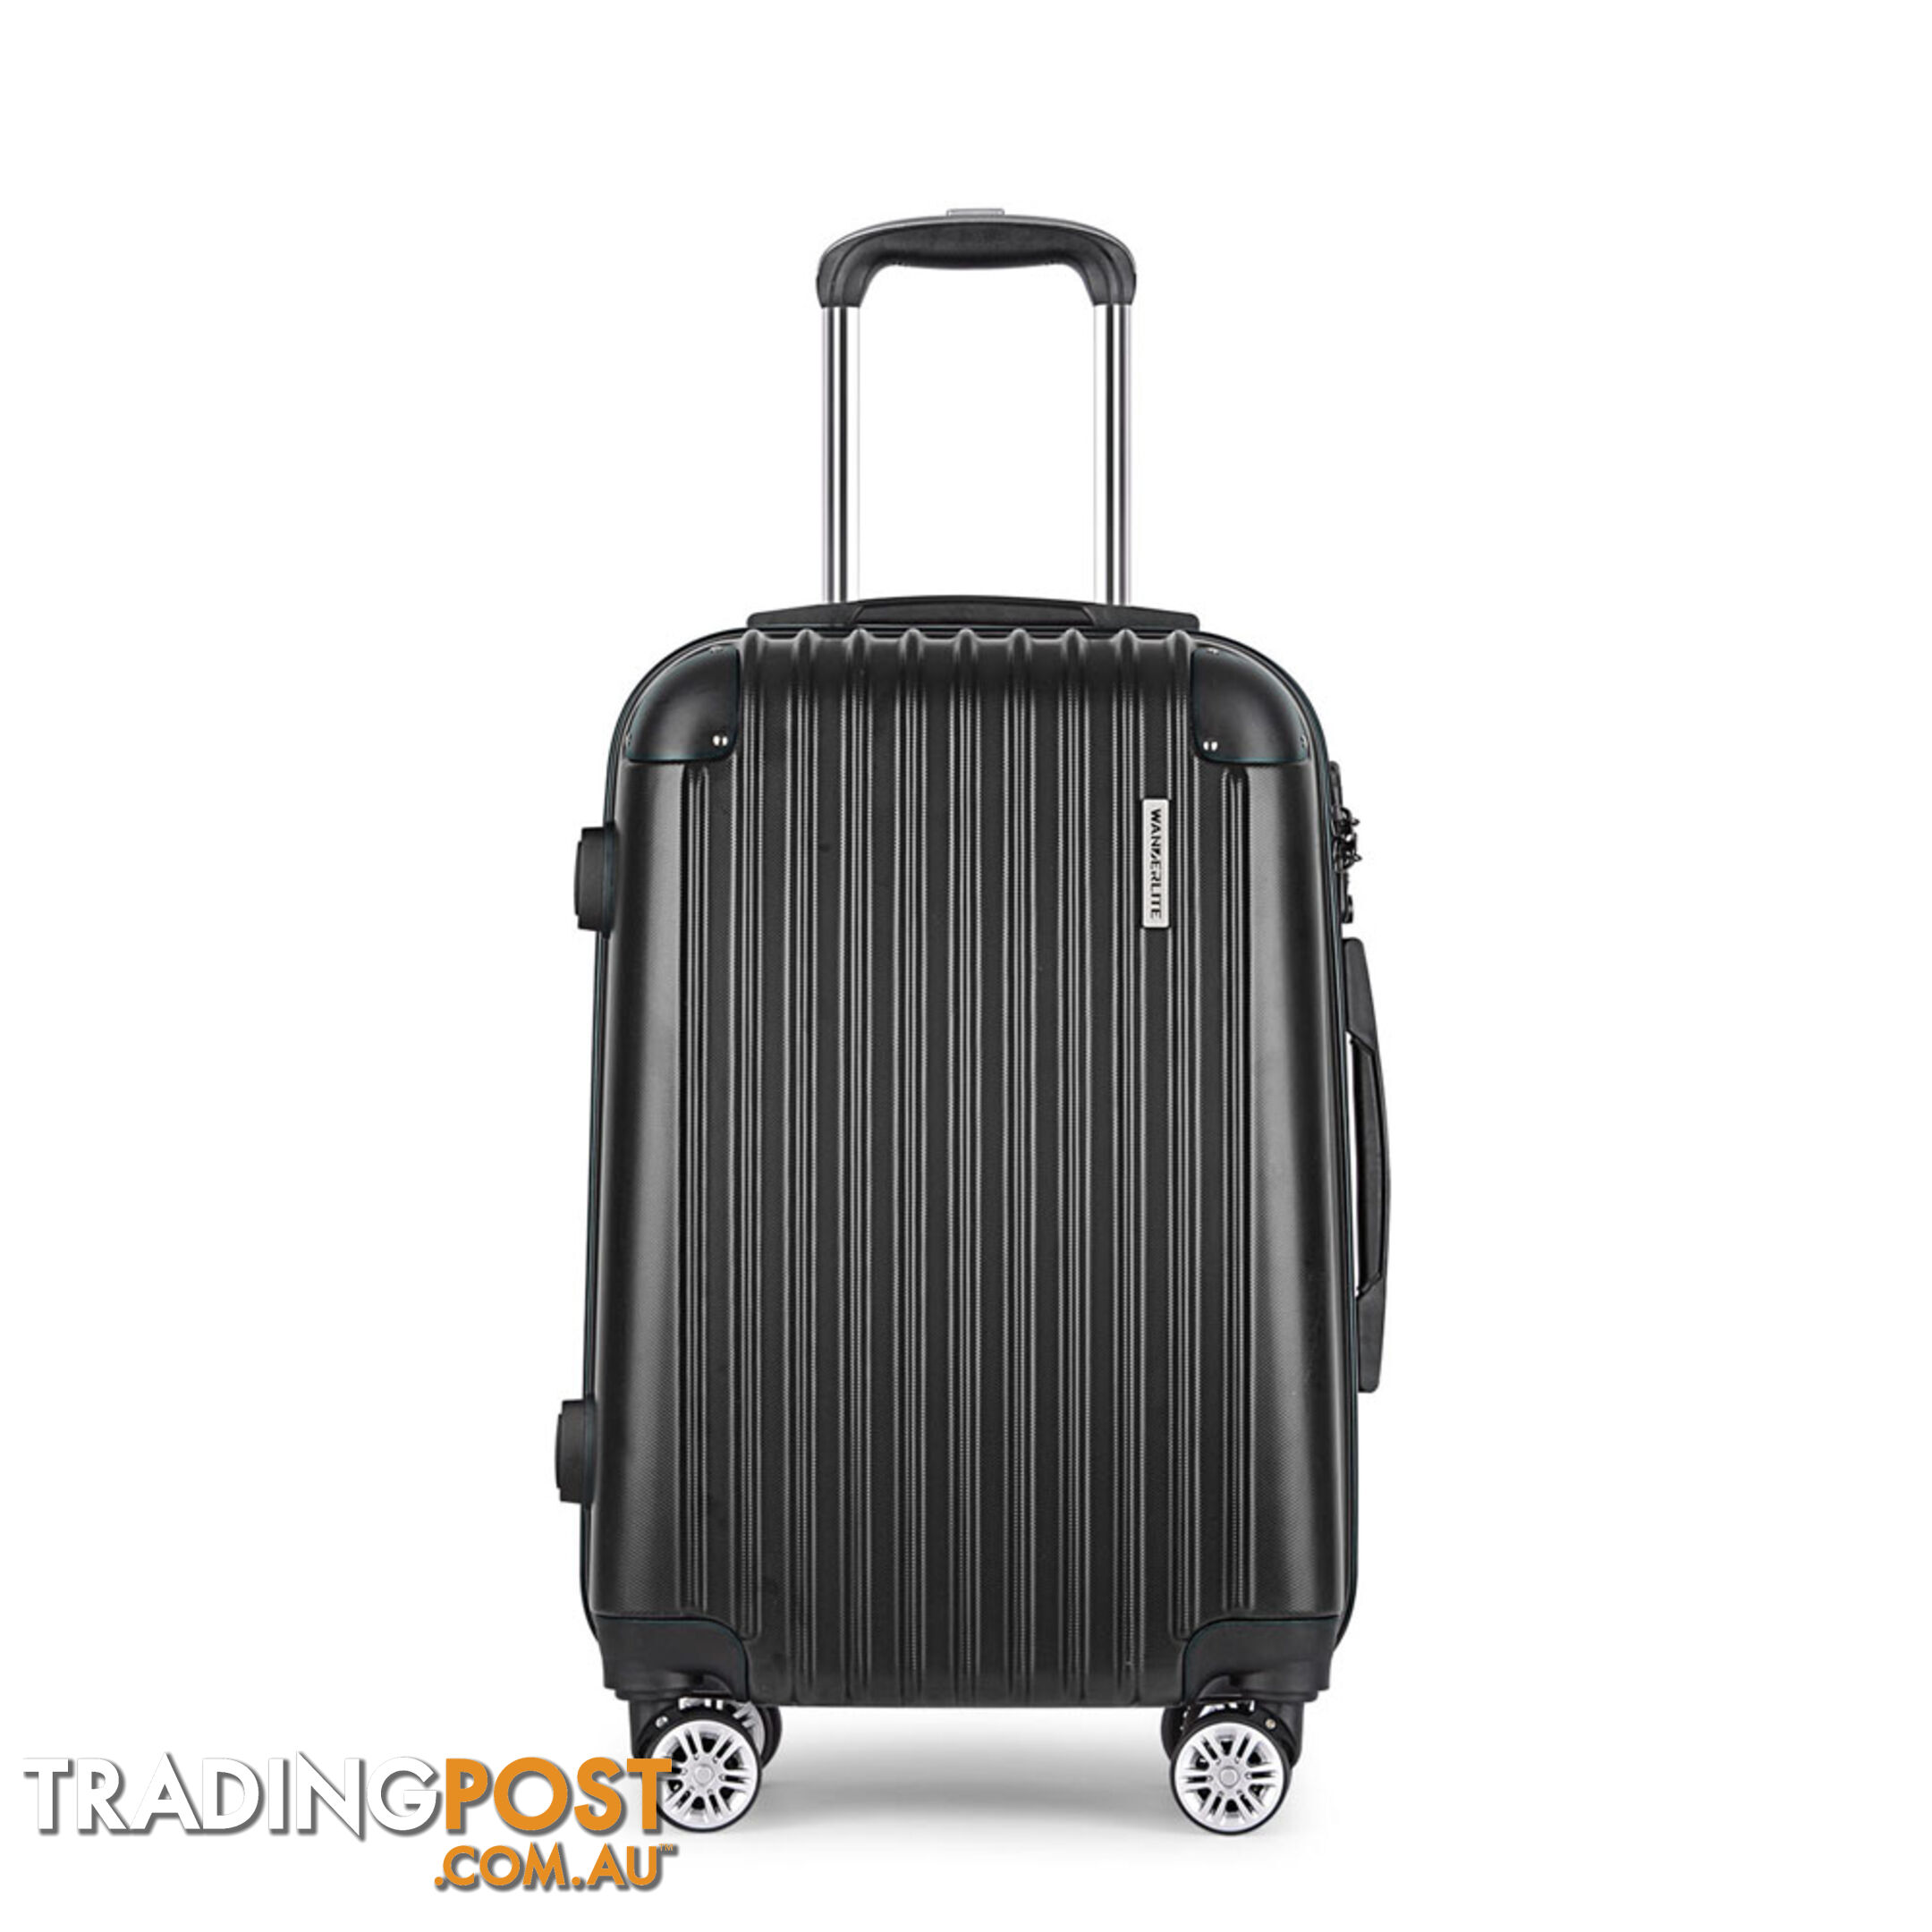 20"  Wanderlite Luggage Case  Black